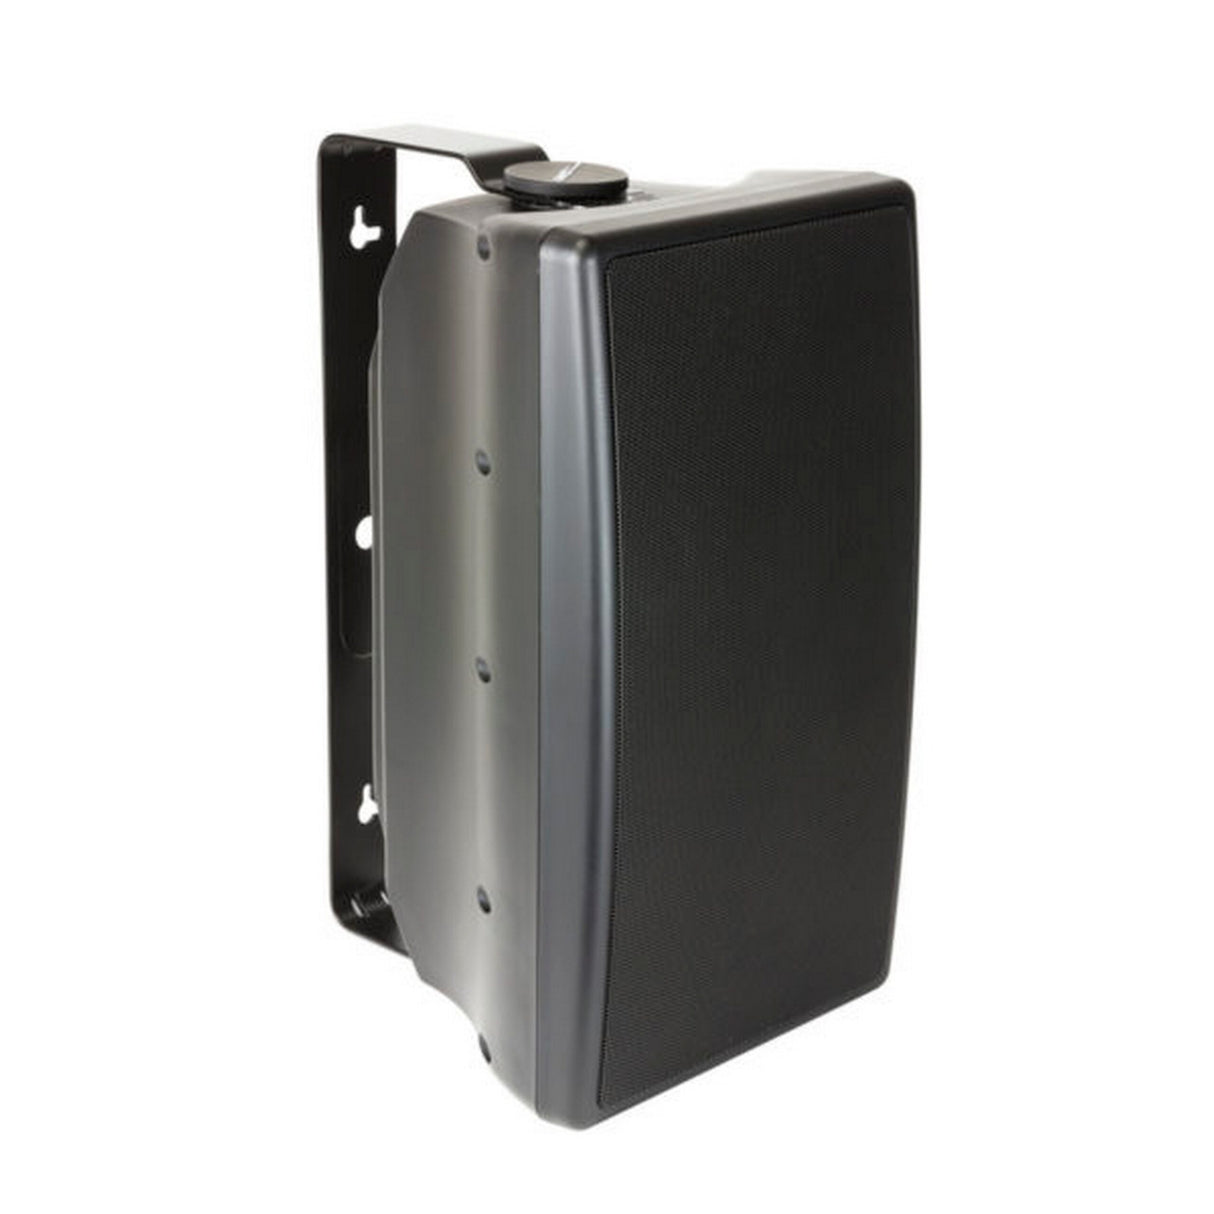 Lowell OS-150-TB 8 Inch 150W Indoor/Outdoor Speaker, Black